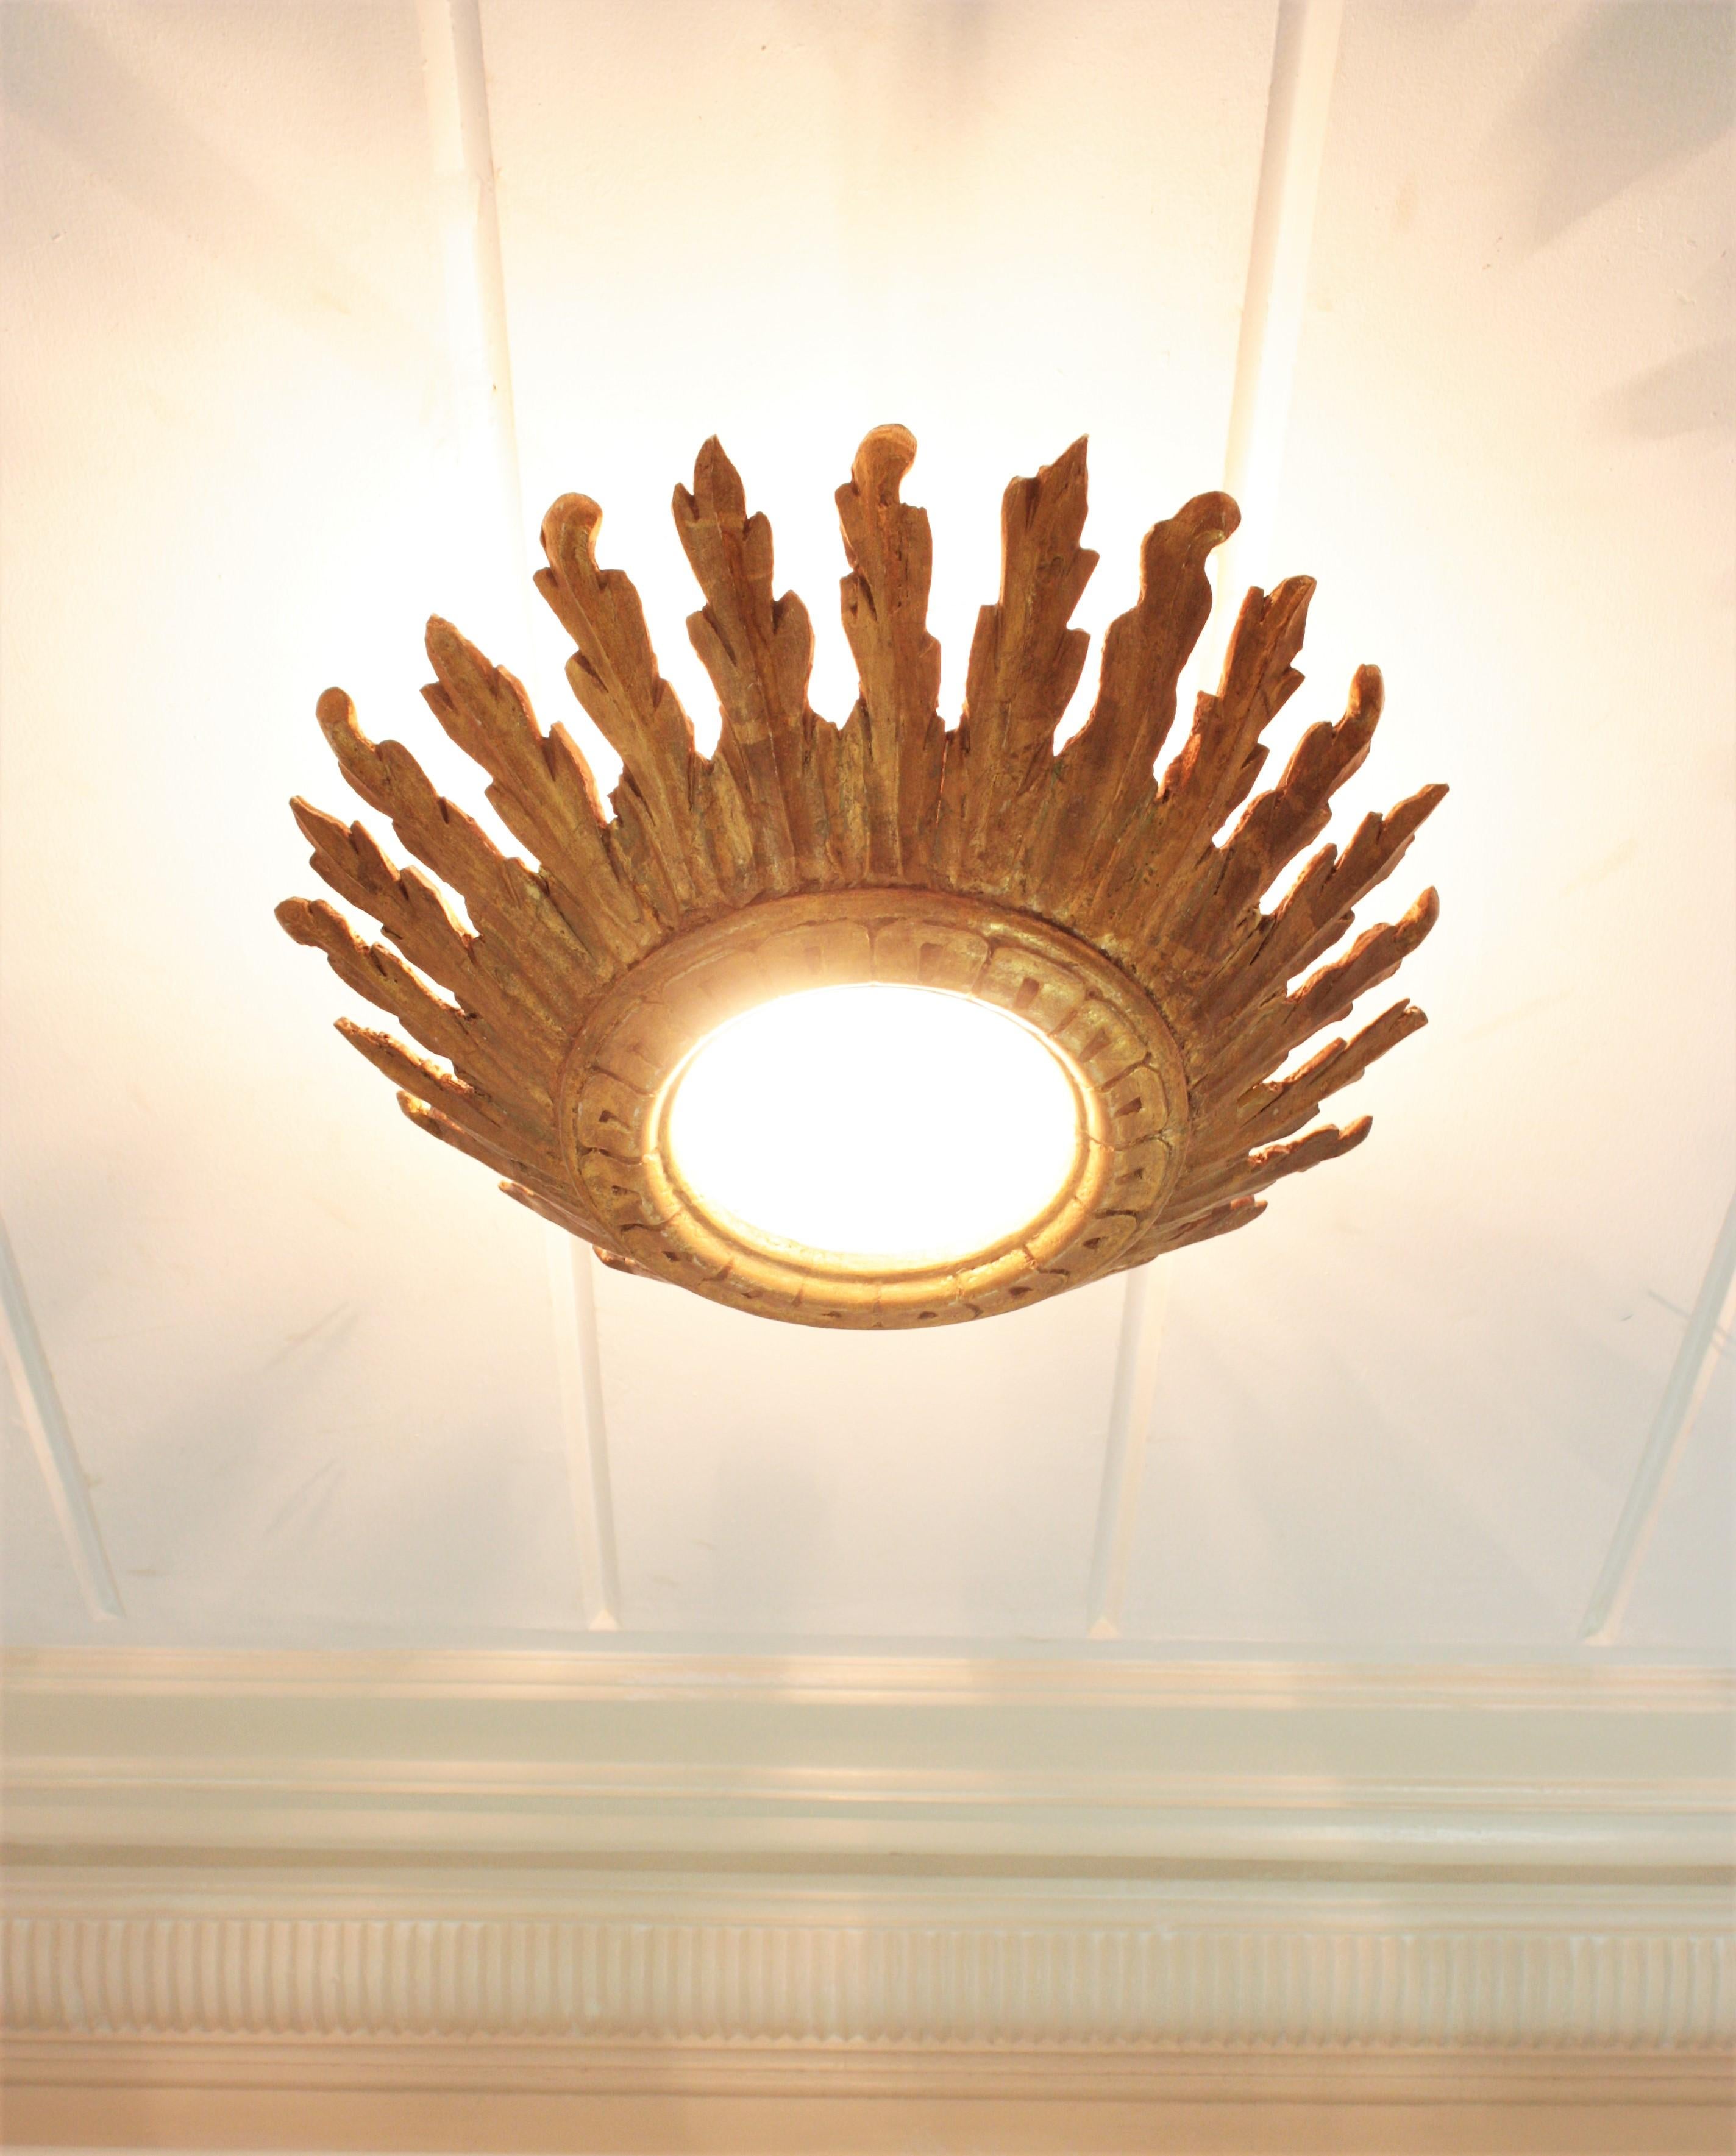 20th Century Sunburst Crown Ceiling Flush Mount Light Fixture in Giltwood, Spanish Baroque For Sale